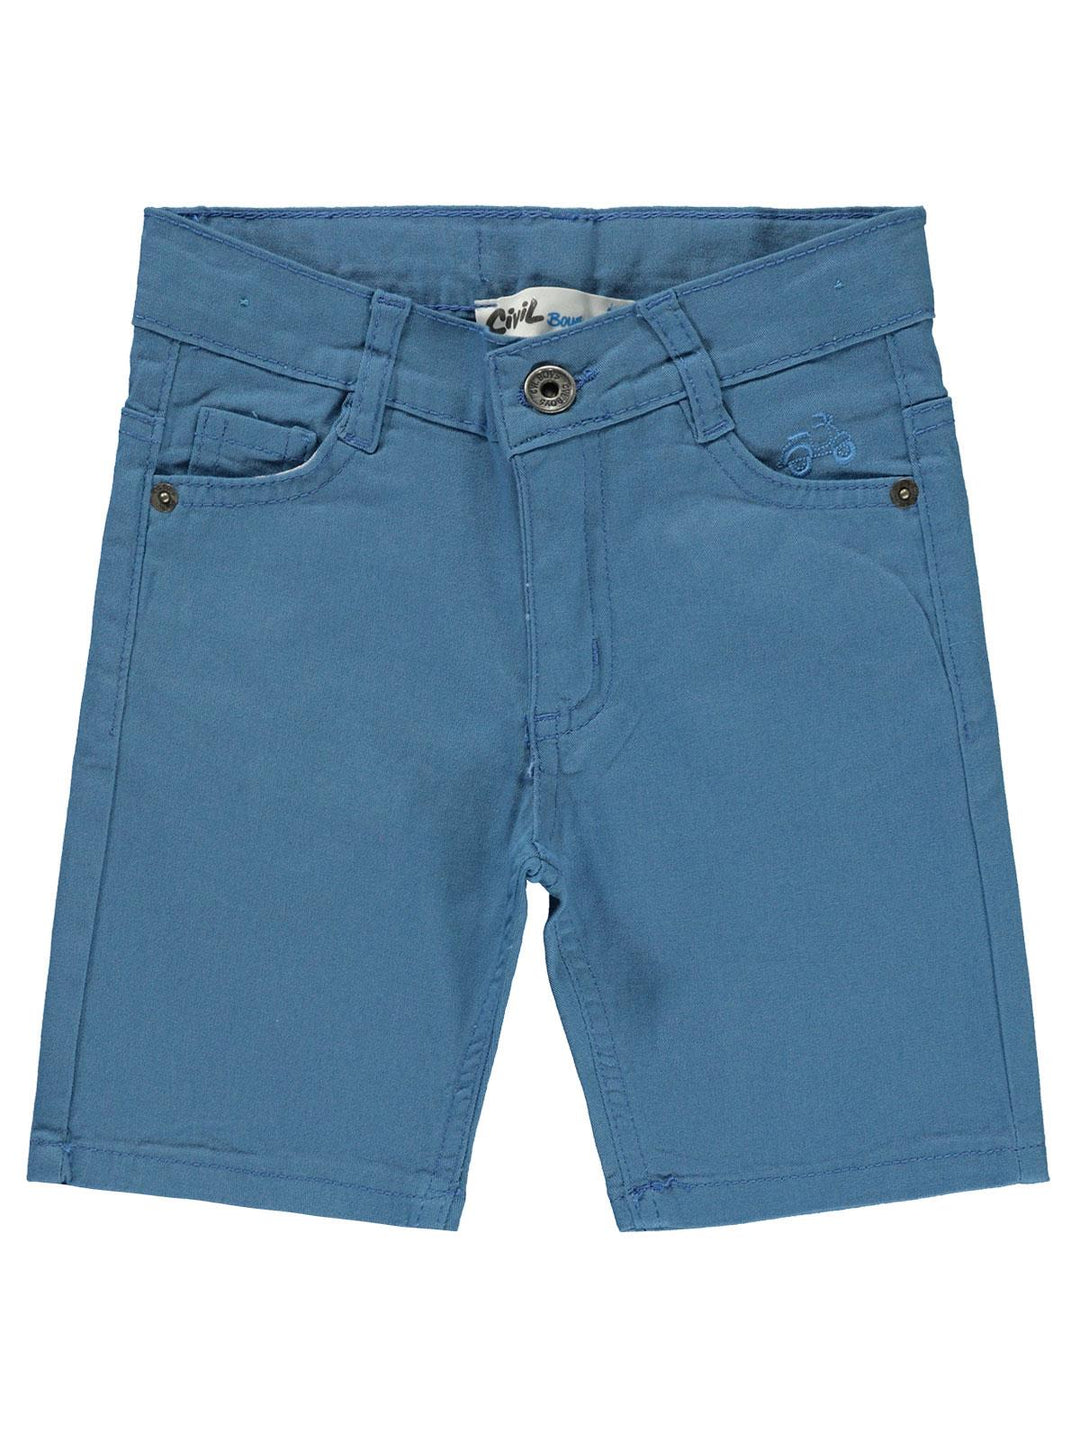 Civil Boys Cotton Shorts #2202-2 (S-22)